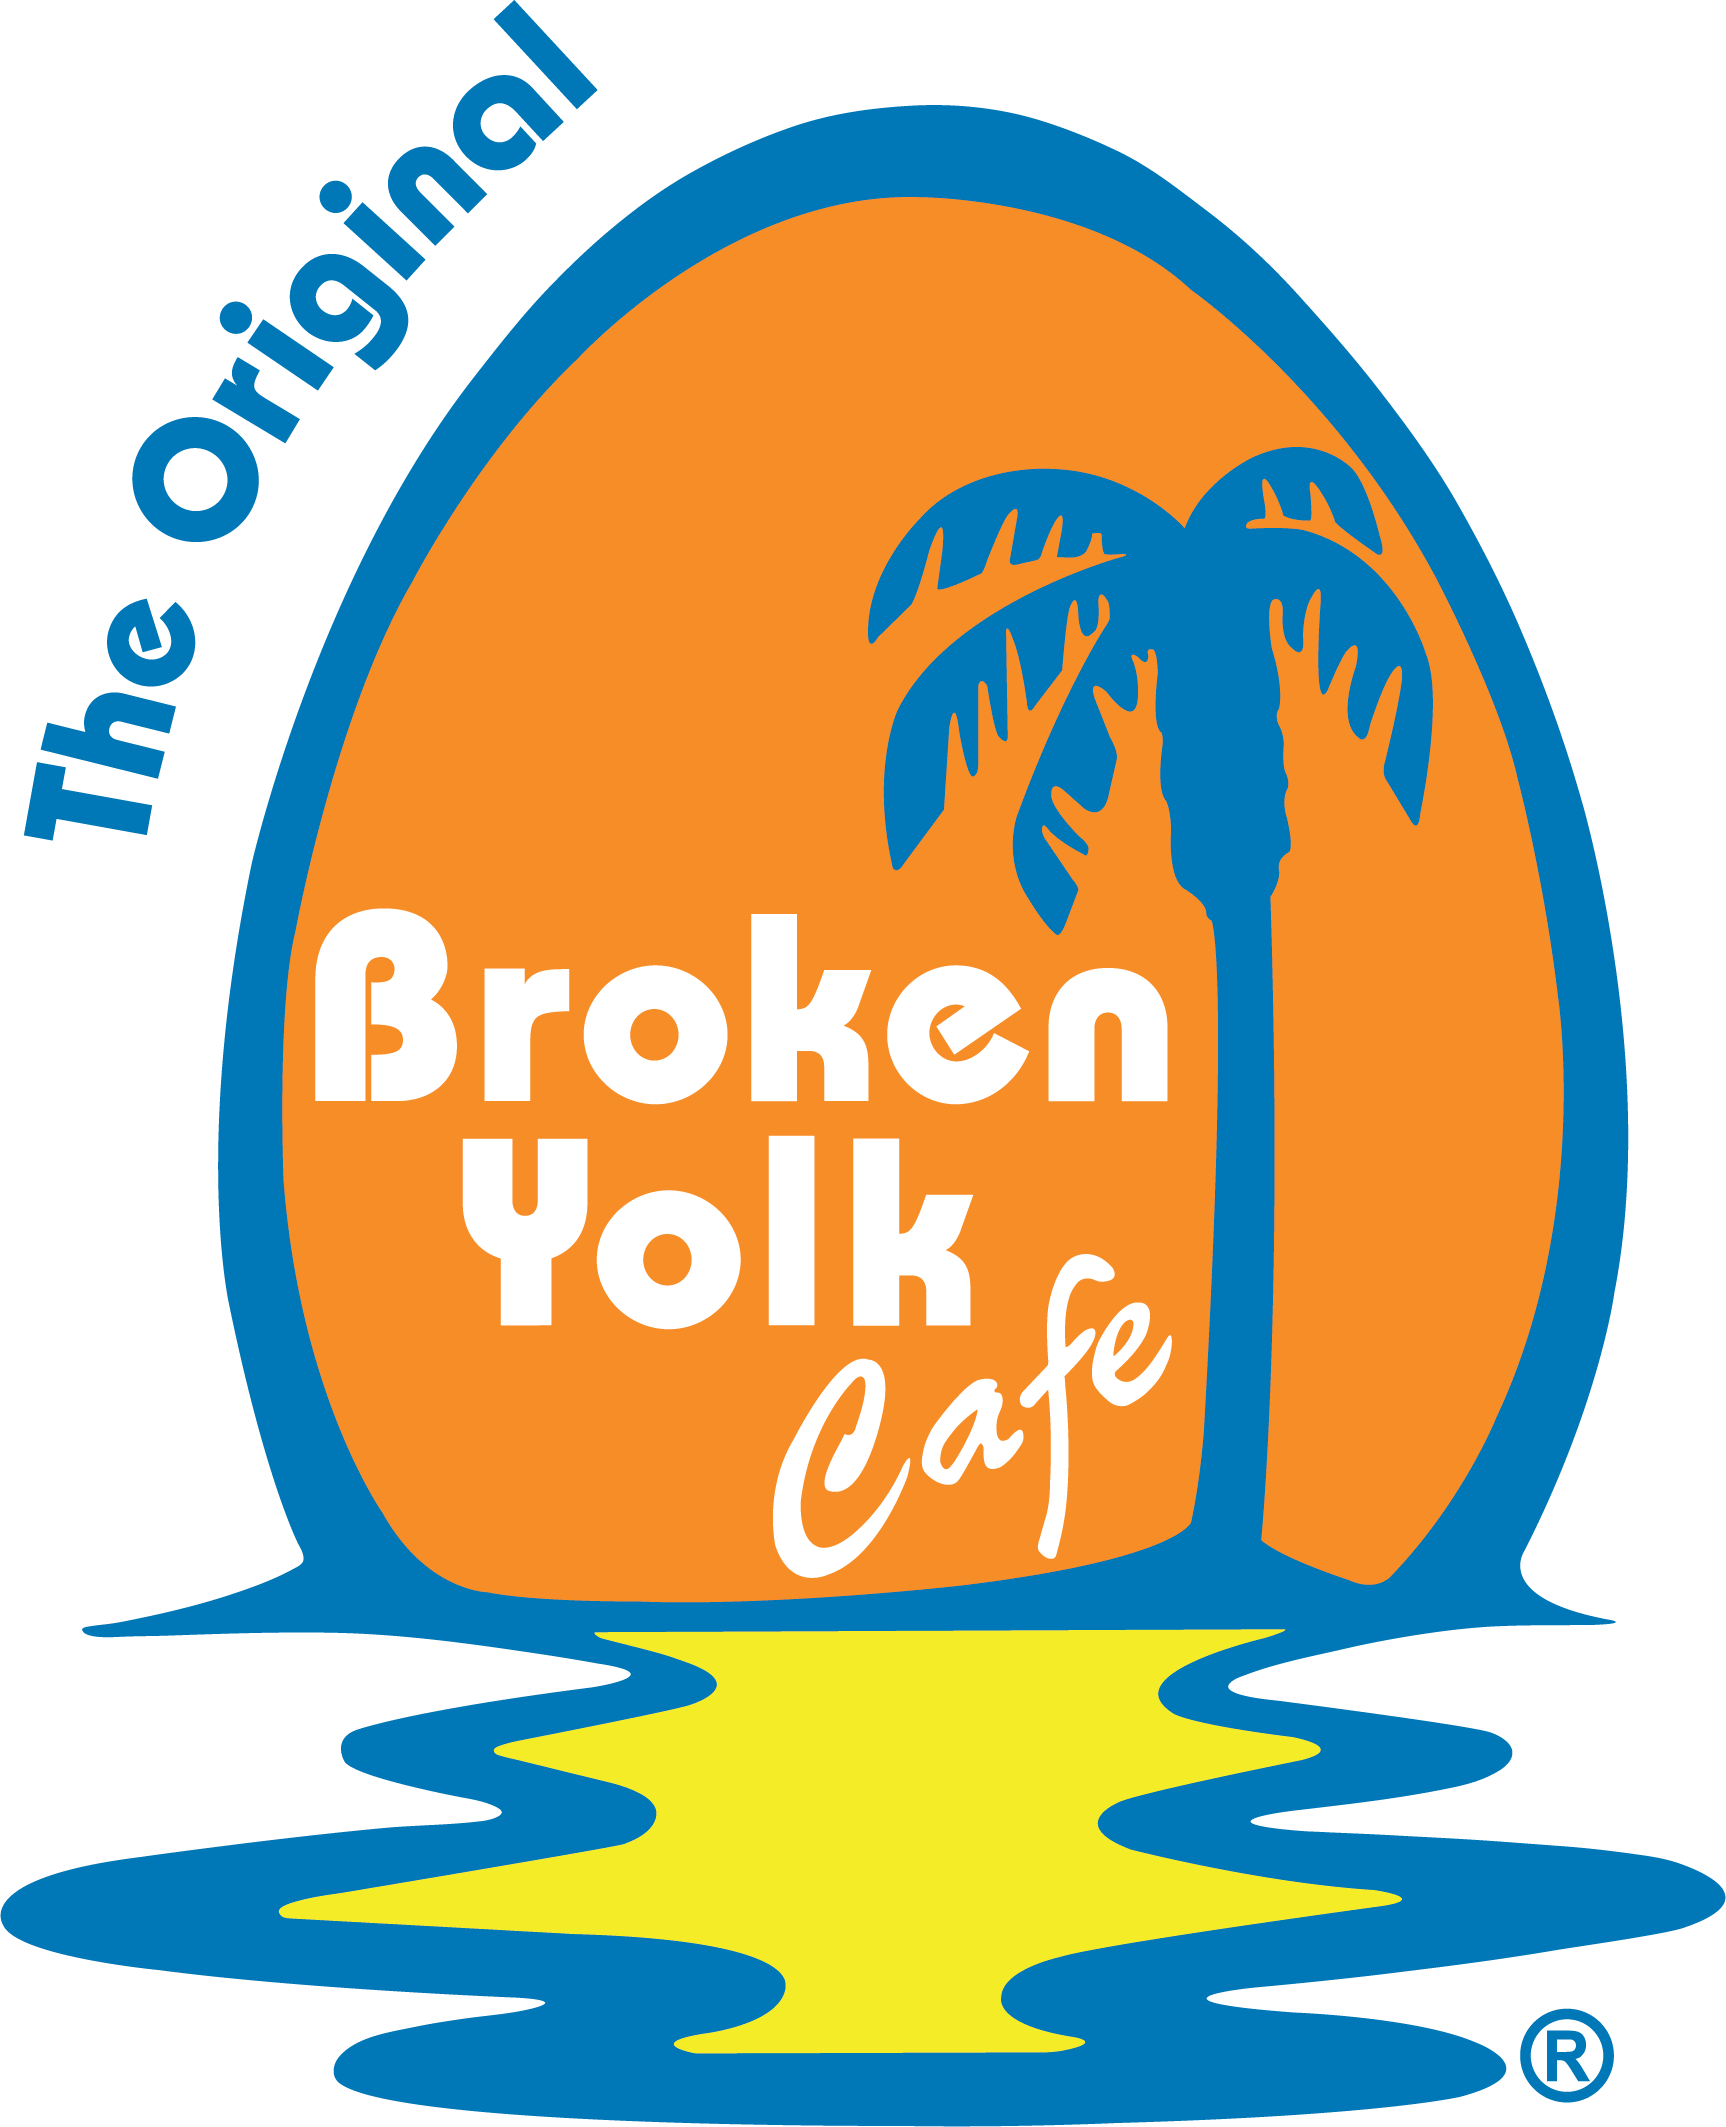 The Broken Yolk Cafe - Broken Yolk Cafe San Diego (1726x2127)